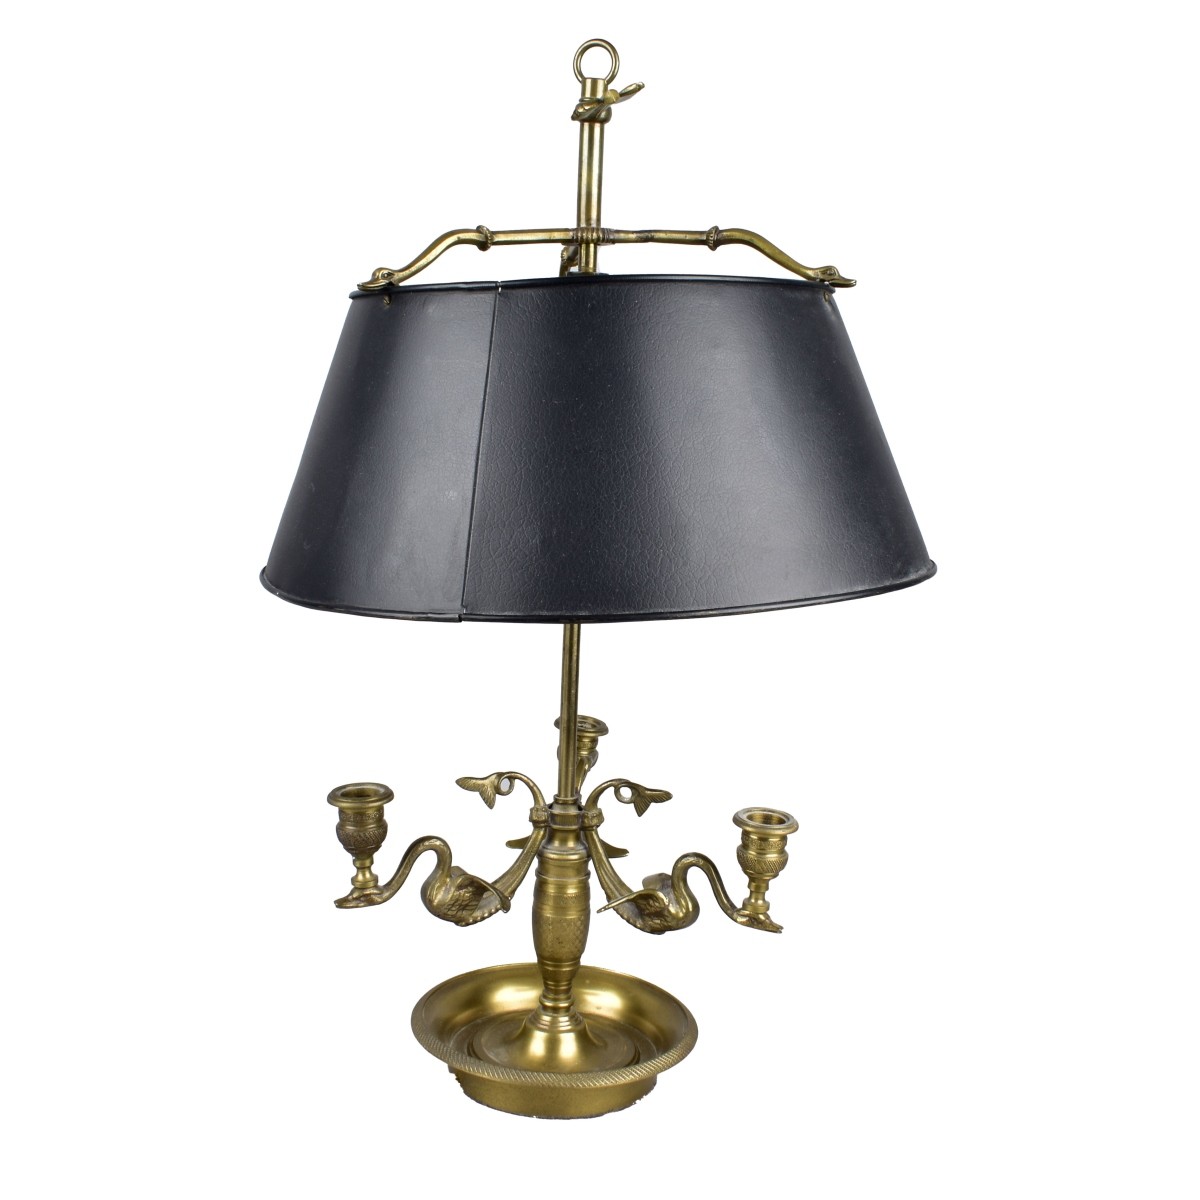 Vintage French Brass Bouilette Lamp